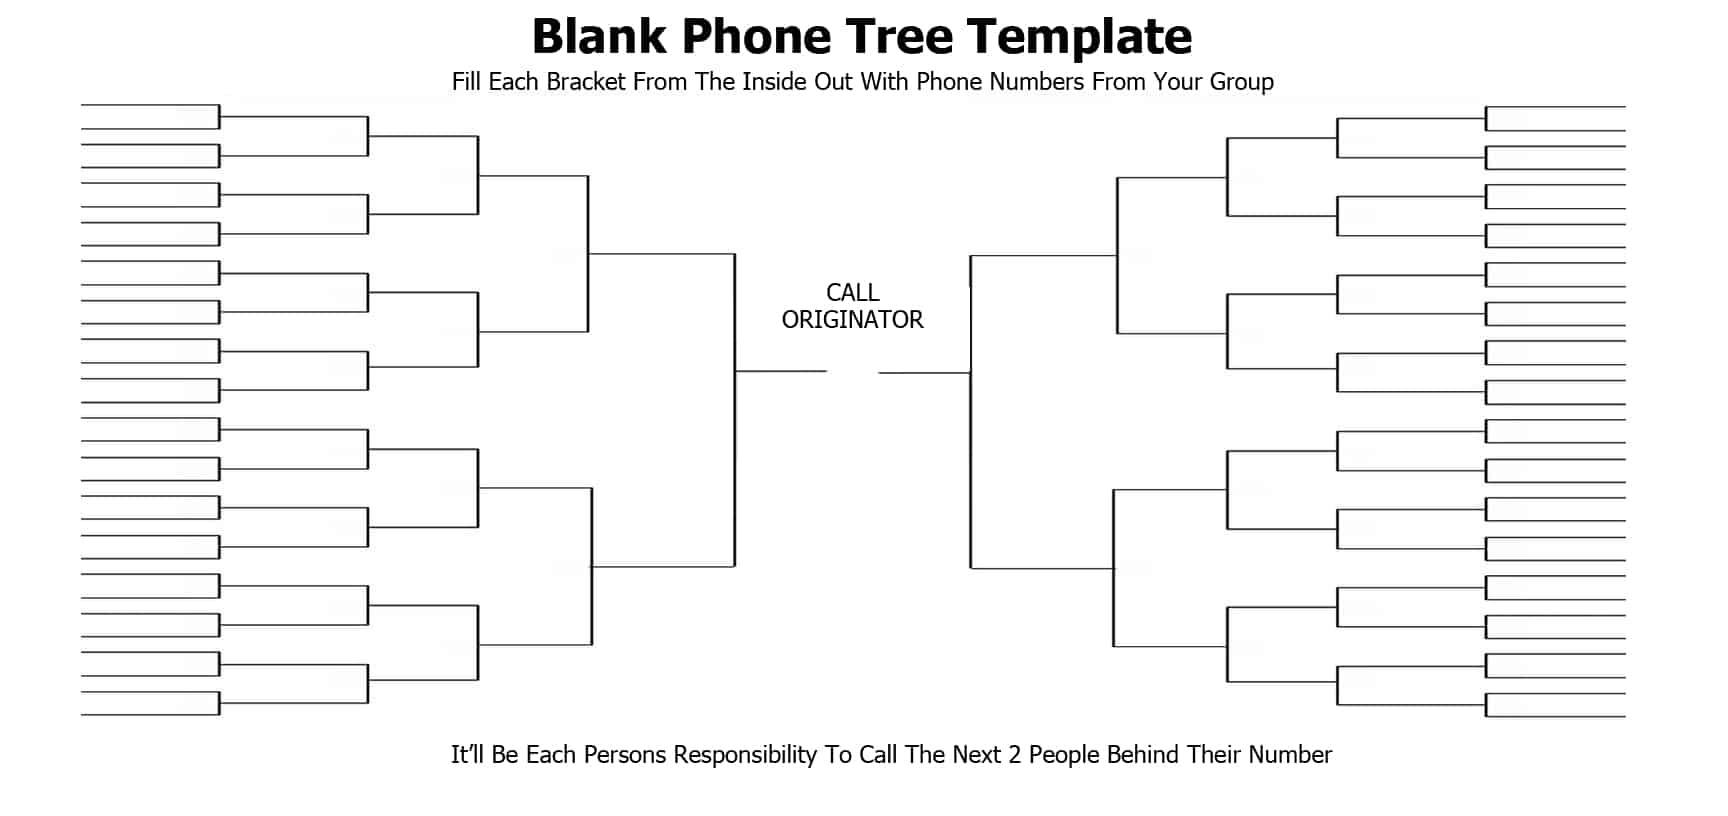 phone tree template image 1